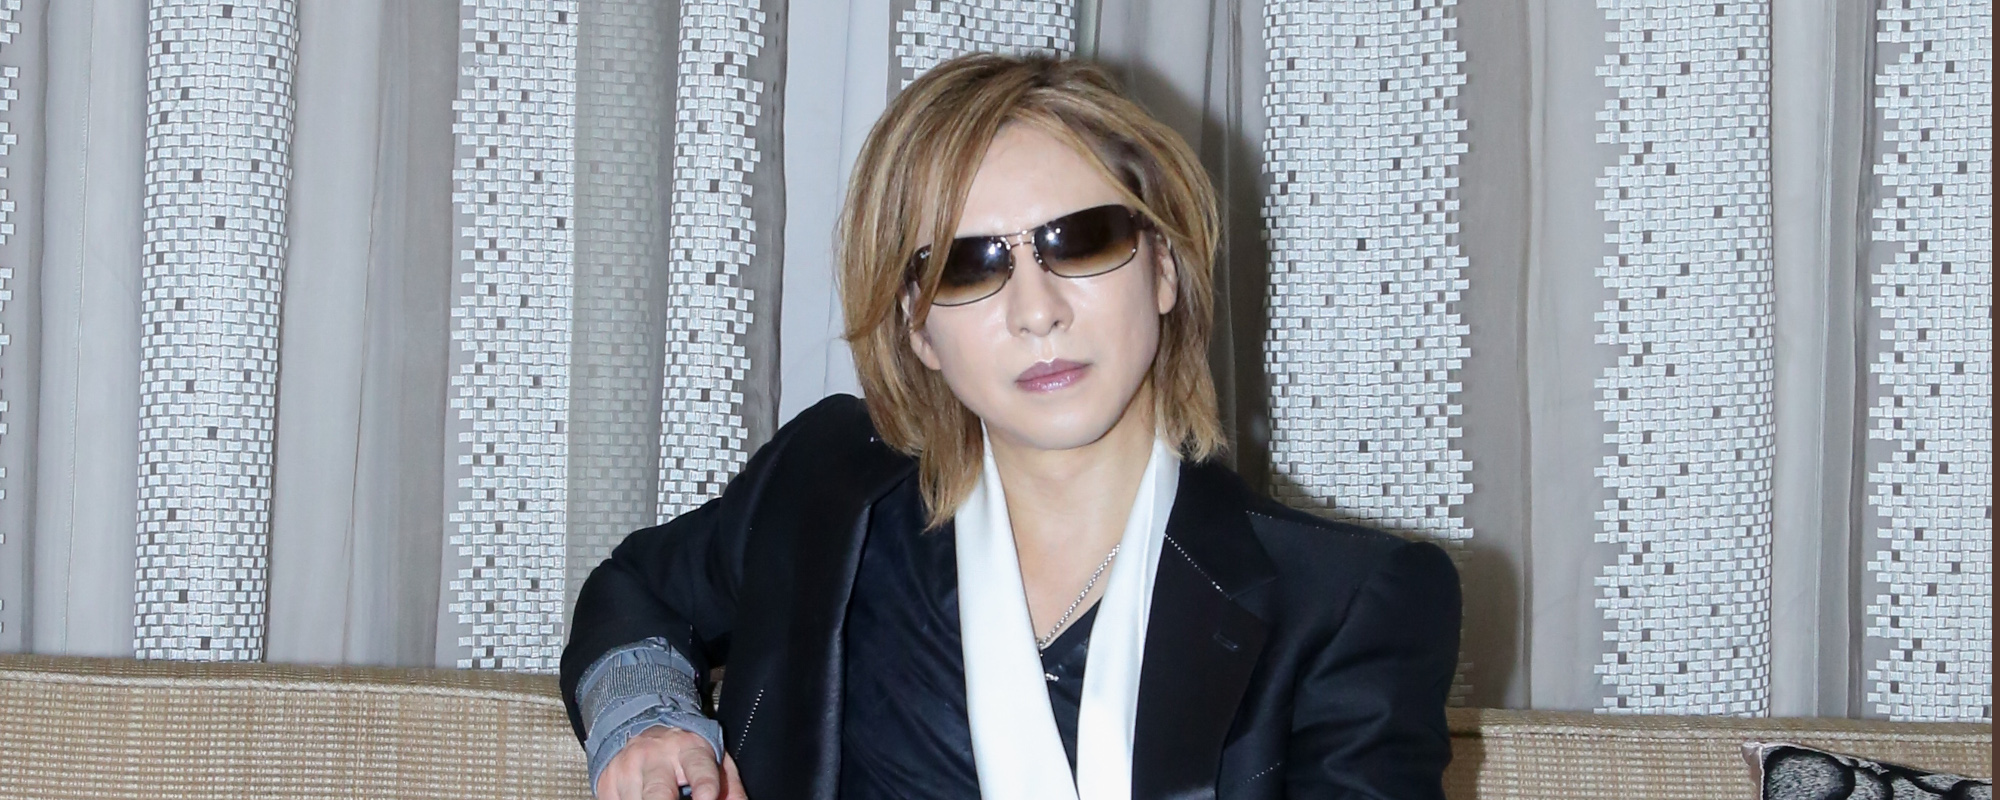 Japanese Music Star Yoshiki Raises $9 Million for Ukraine